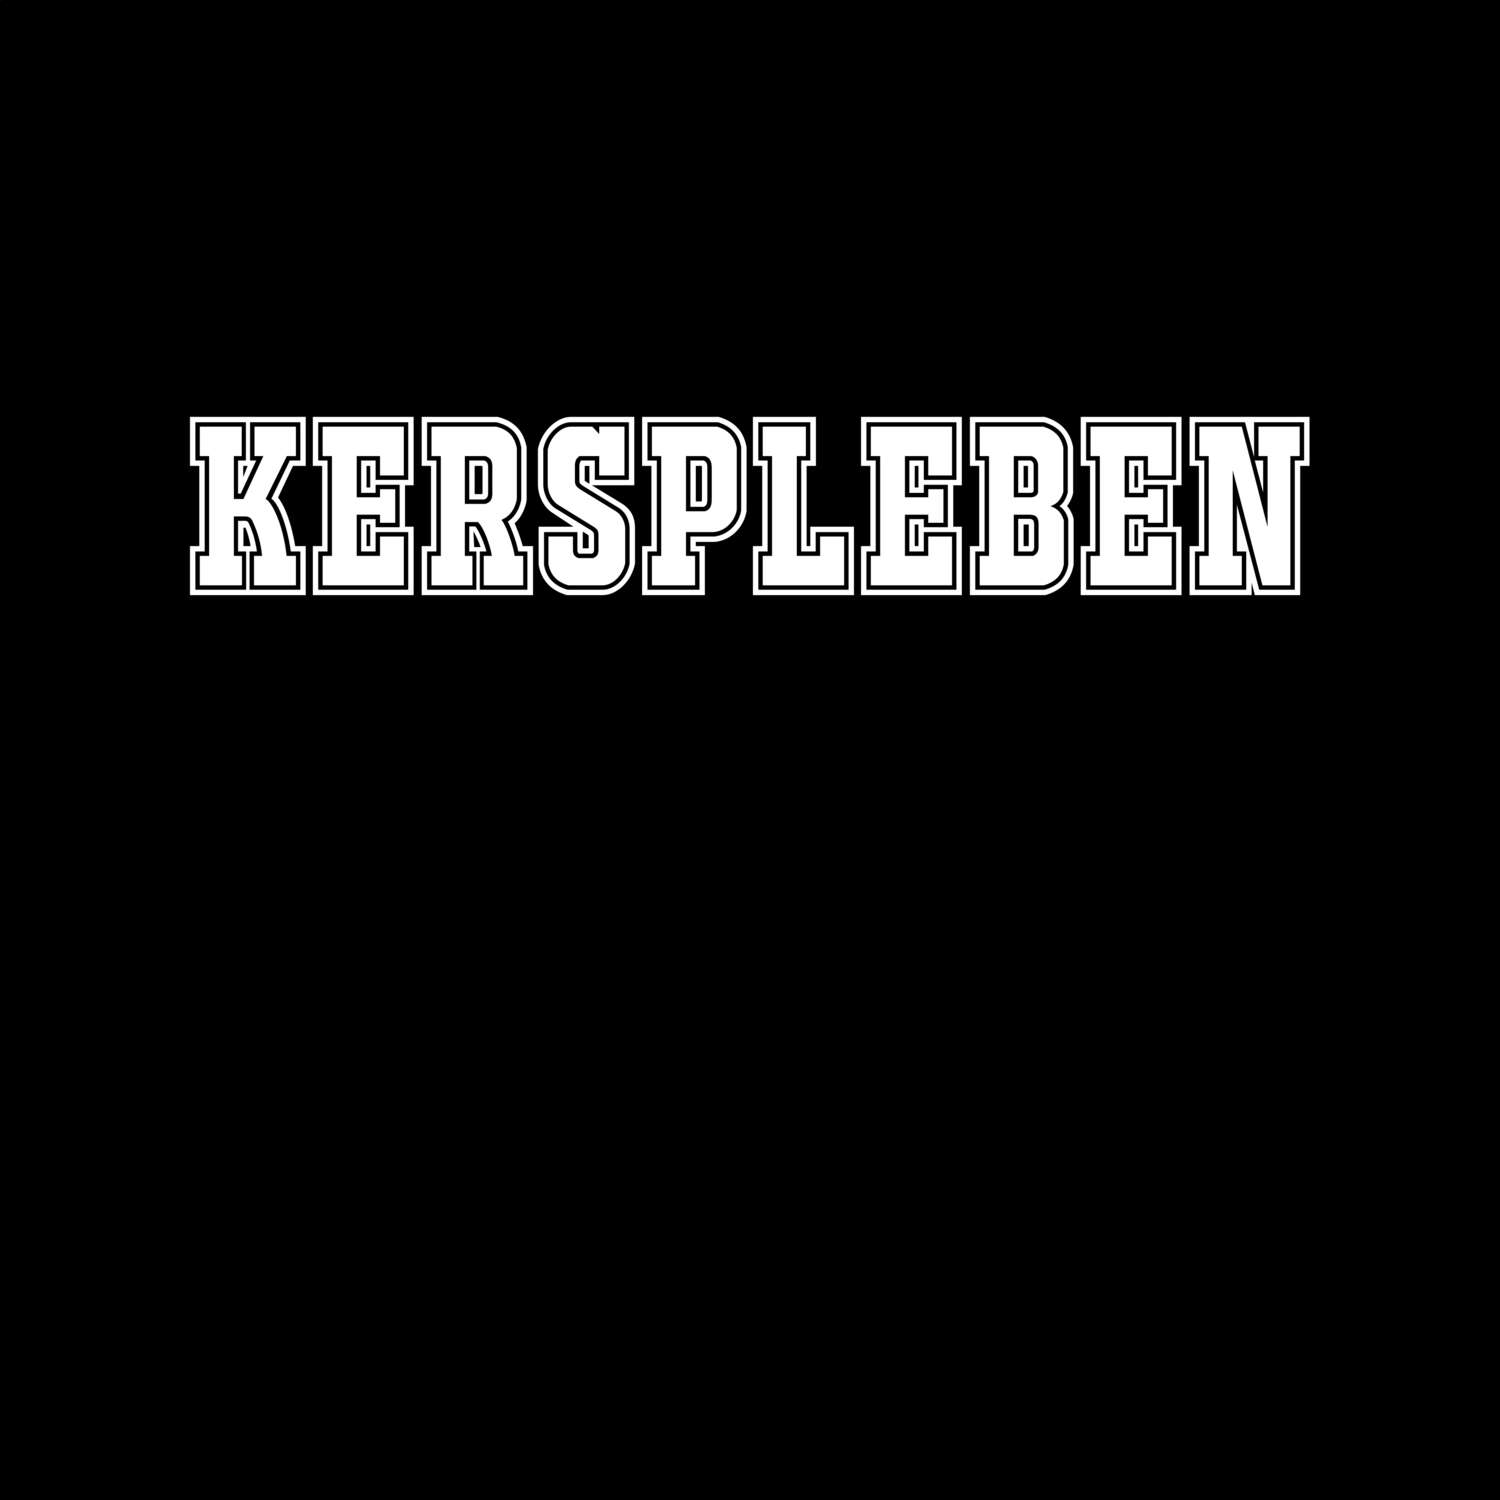 Kerspleben T-Shirt »Classic«